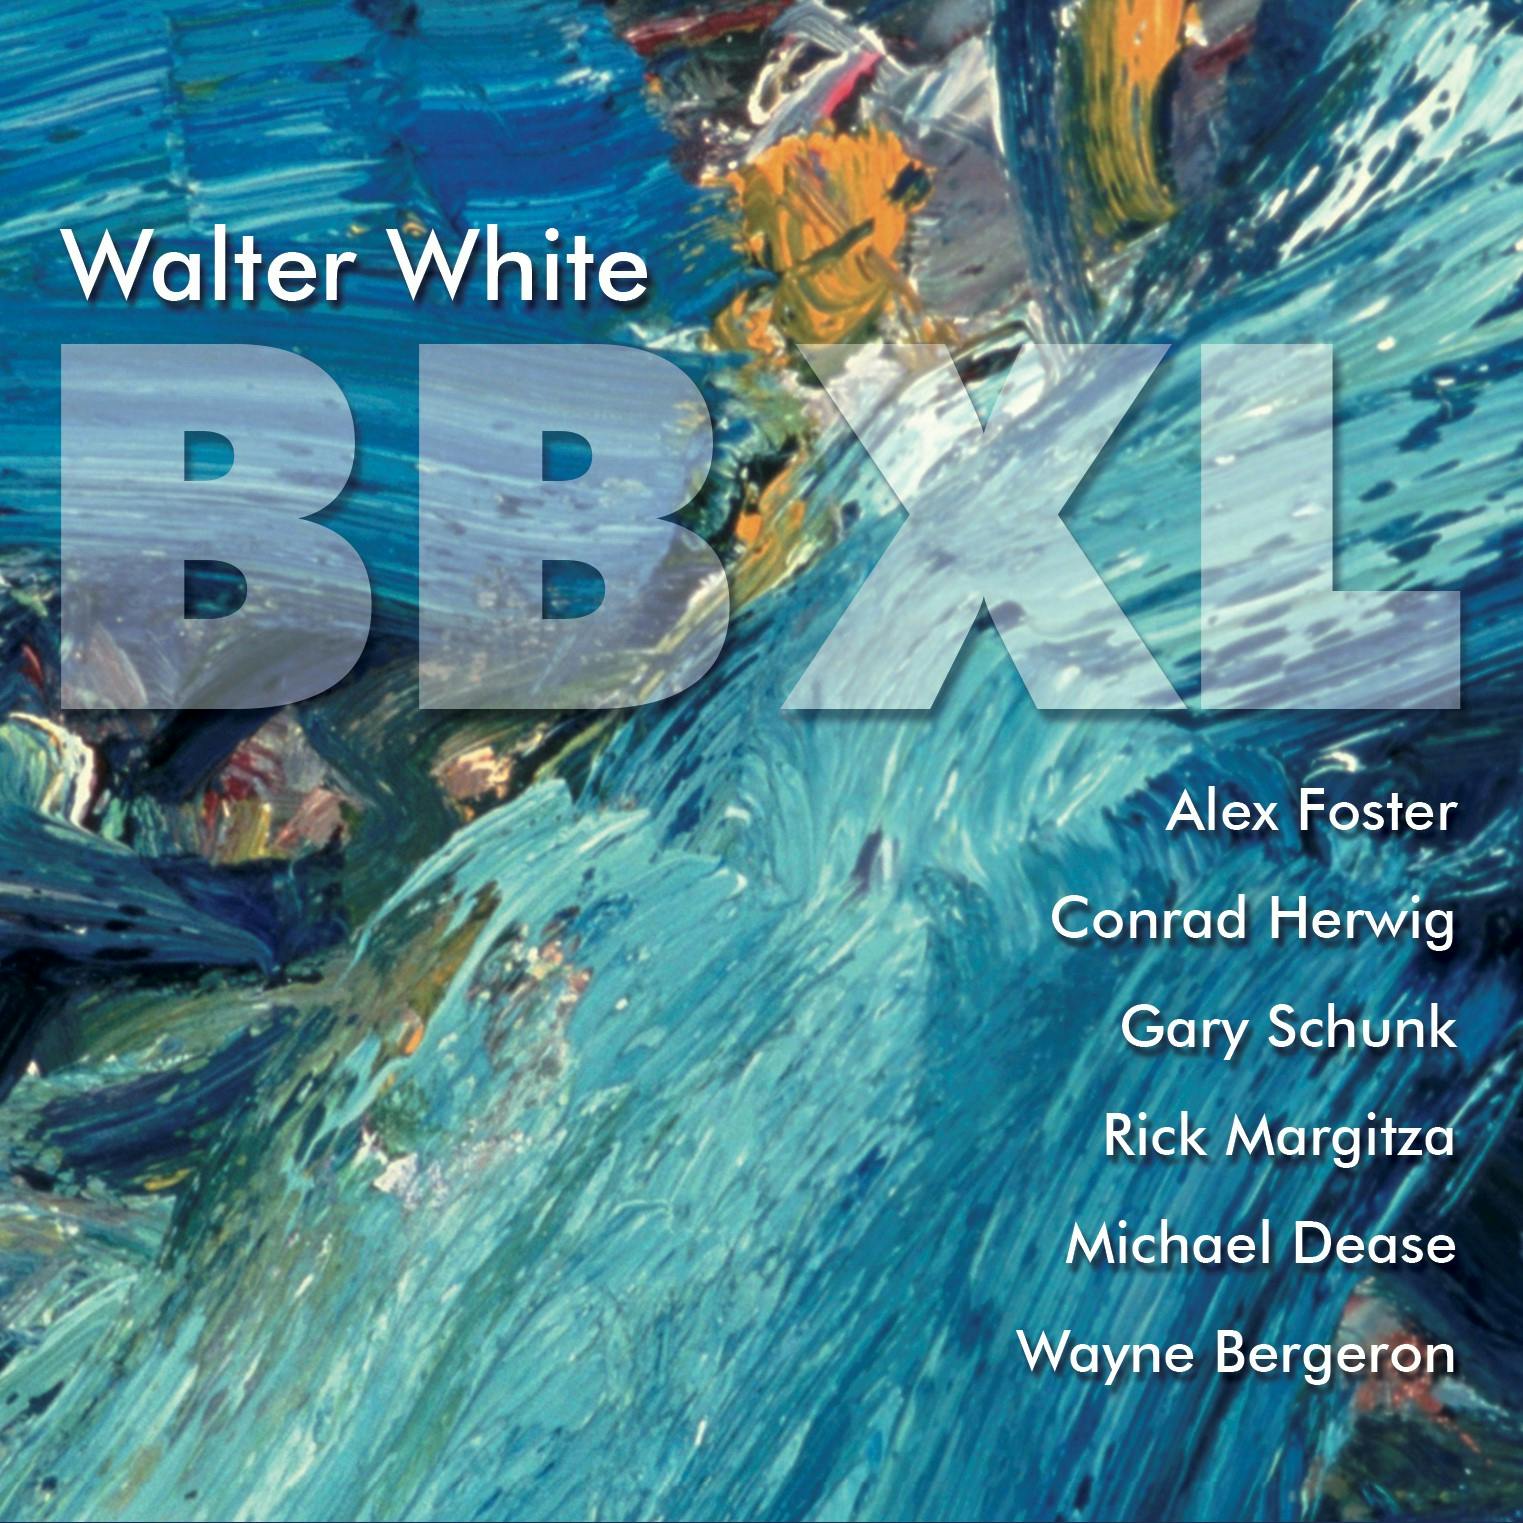 Walter White Big Band CD